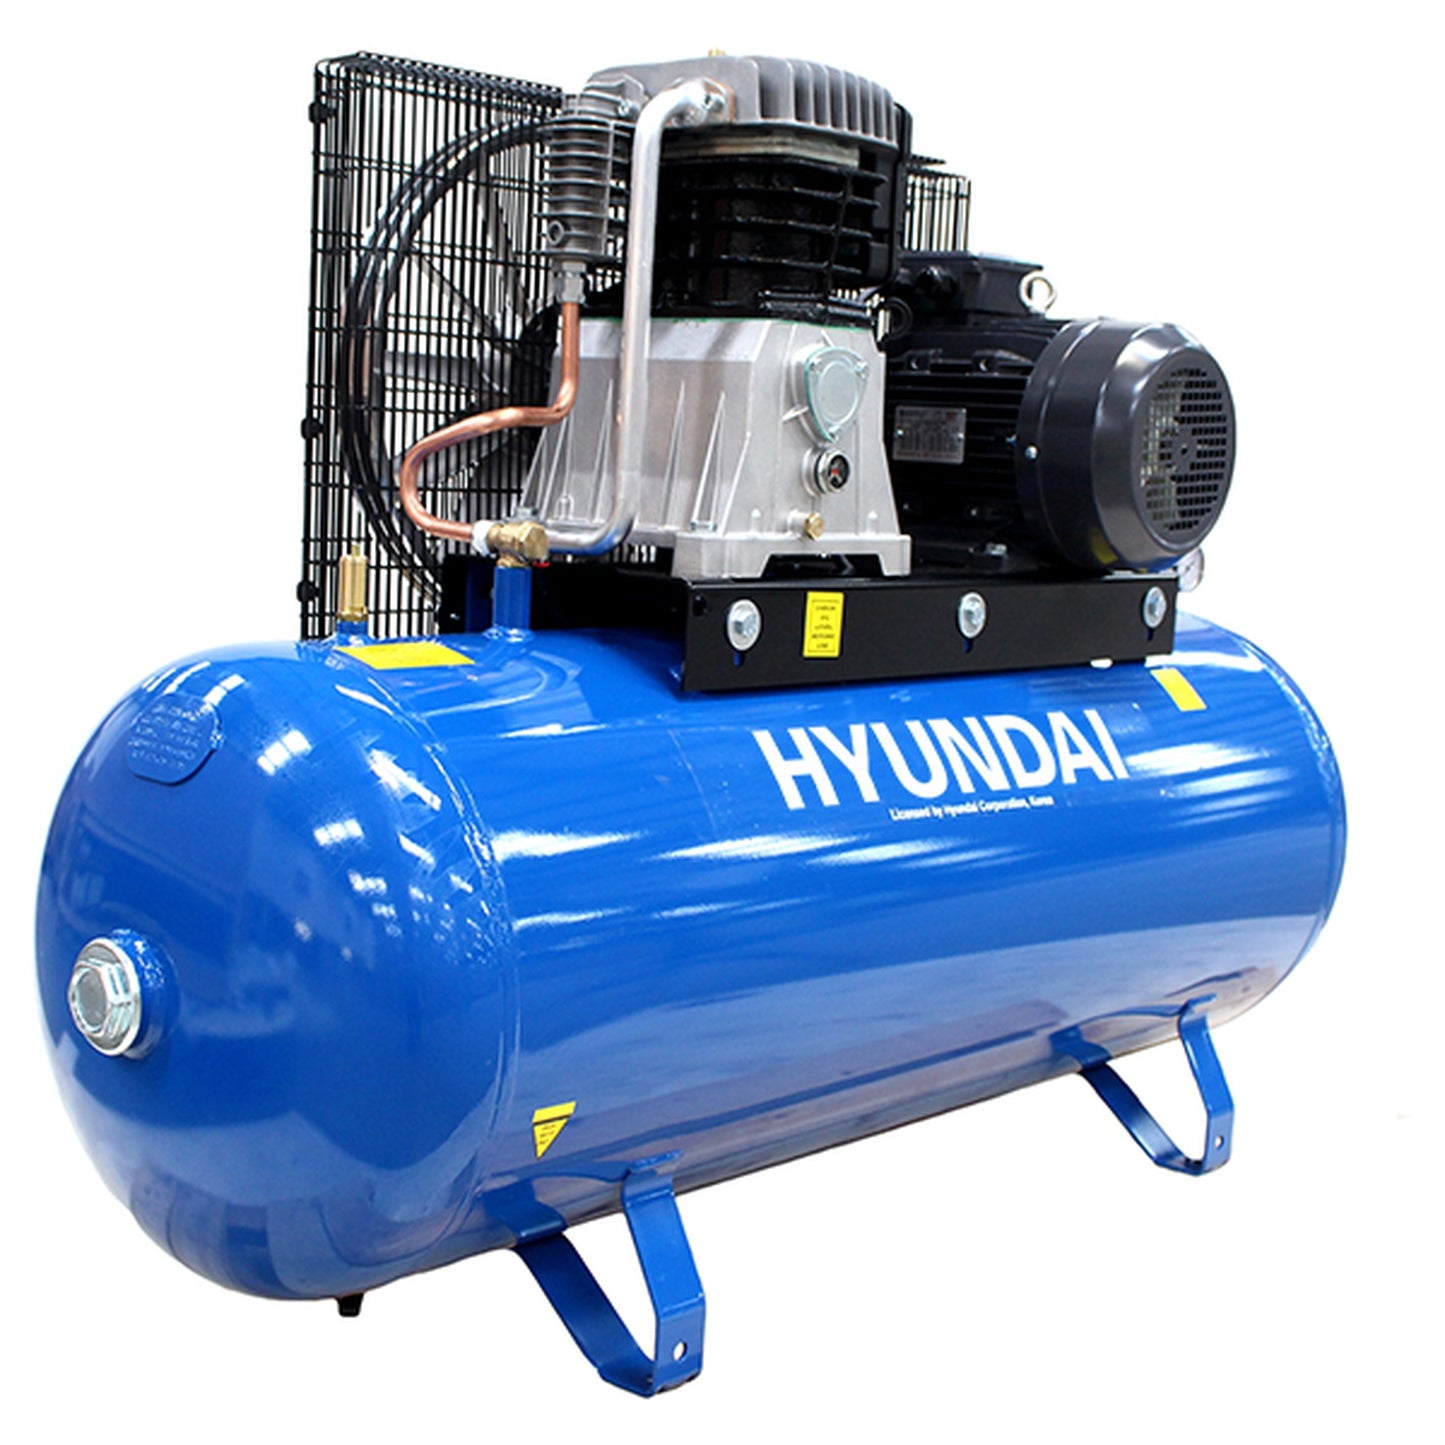 Hyundai HY55200-3 Electric Air Compressor 200L